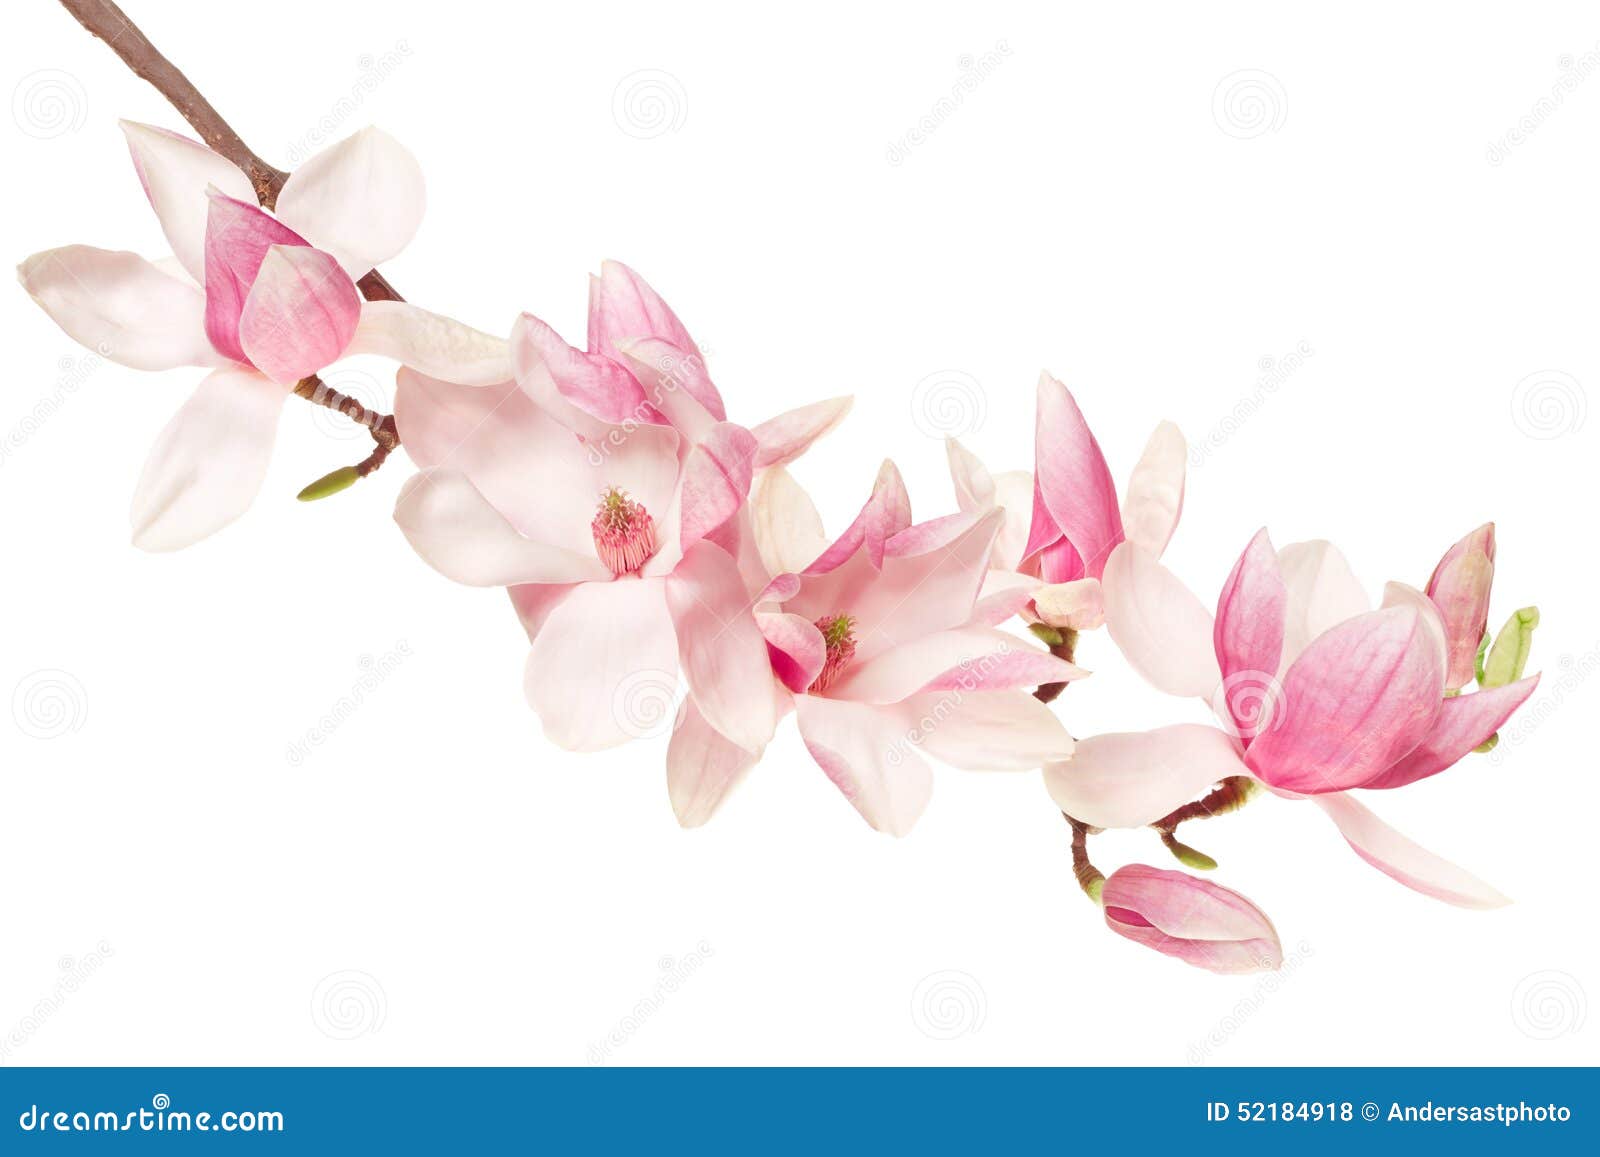 magnolia flower, spring branch on white